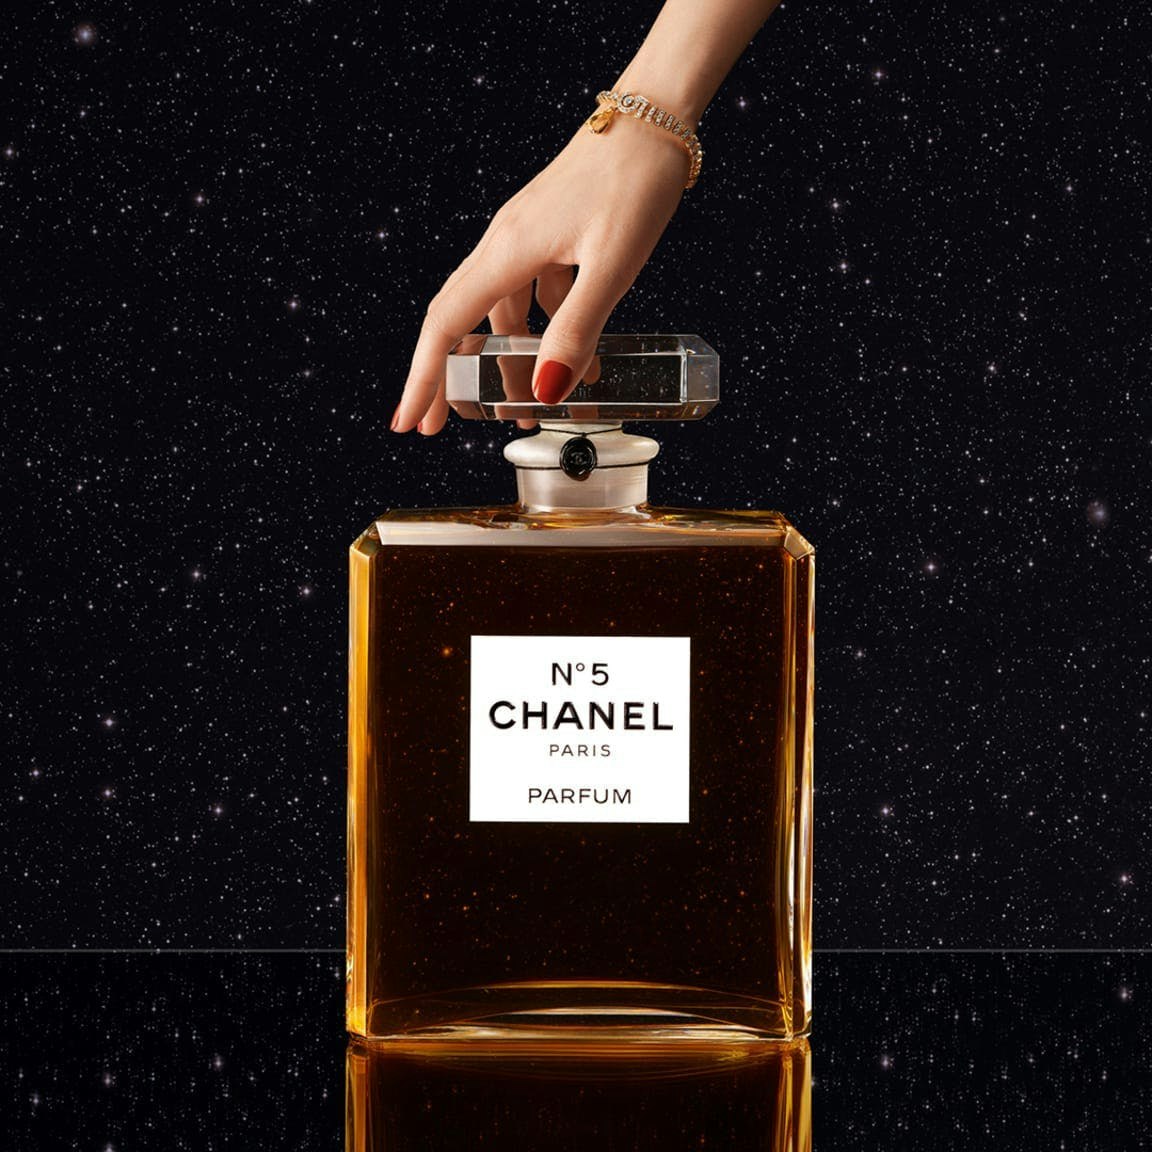 Chanel Coco Mademoiselle Eau De Parfum Spray 100ml/3.4oz 